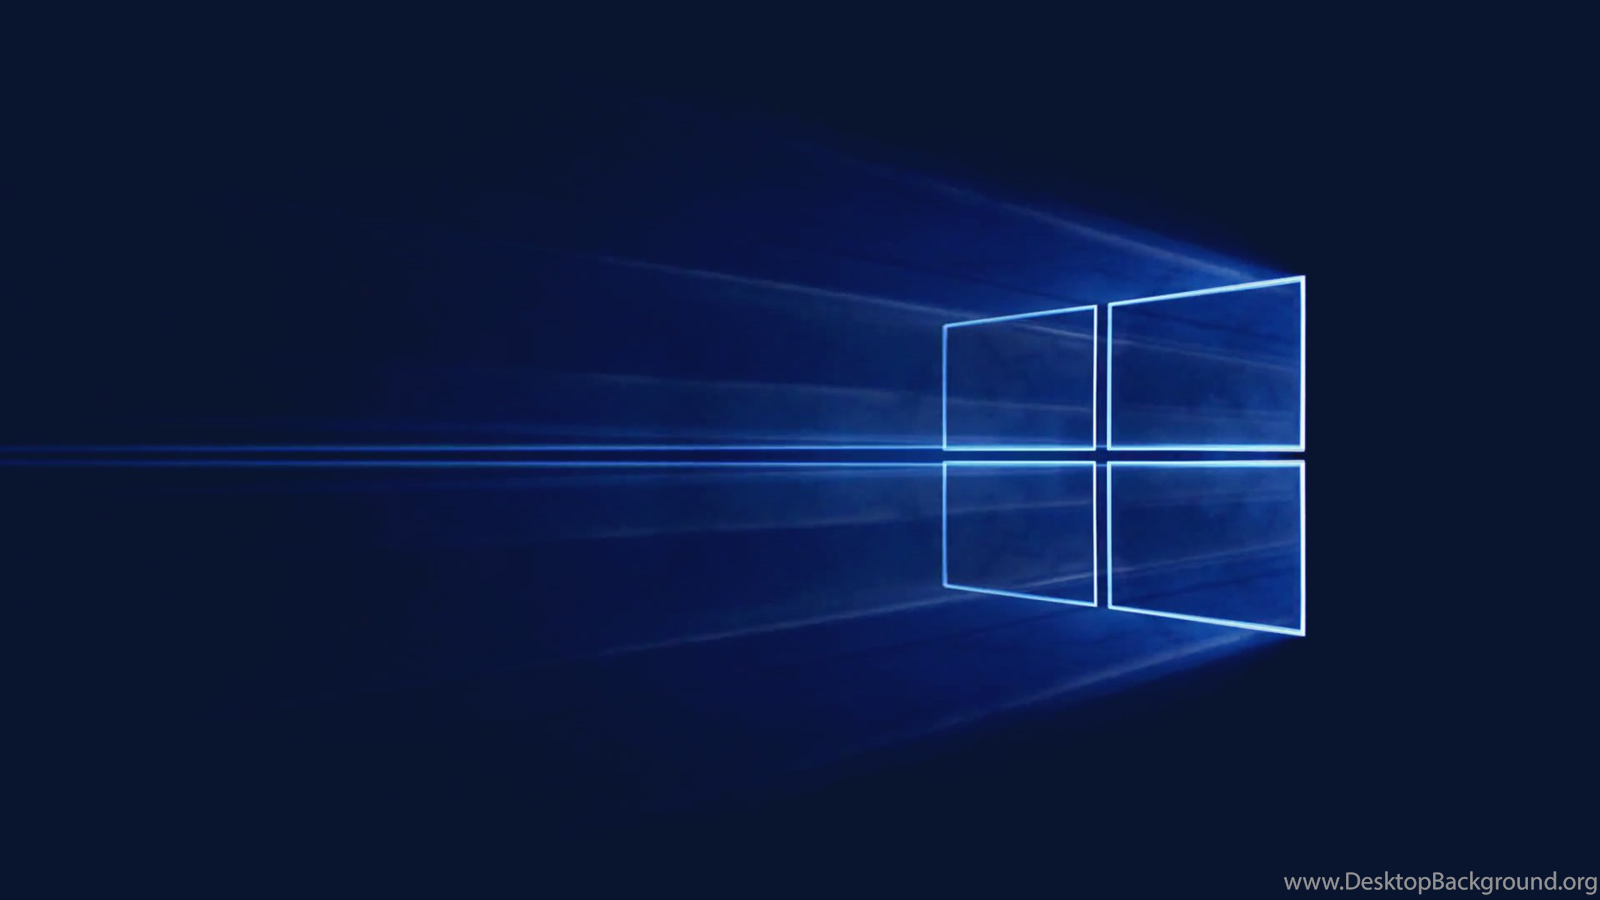  Windows  10  Official Desktop  Backgrounds Windows  10  